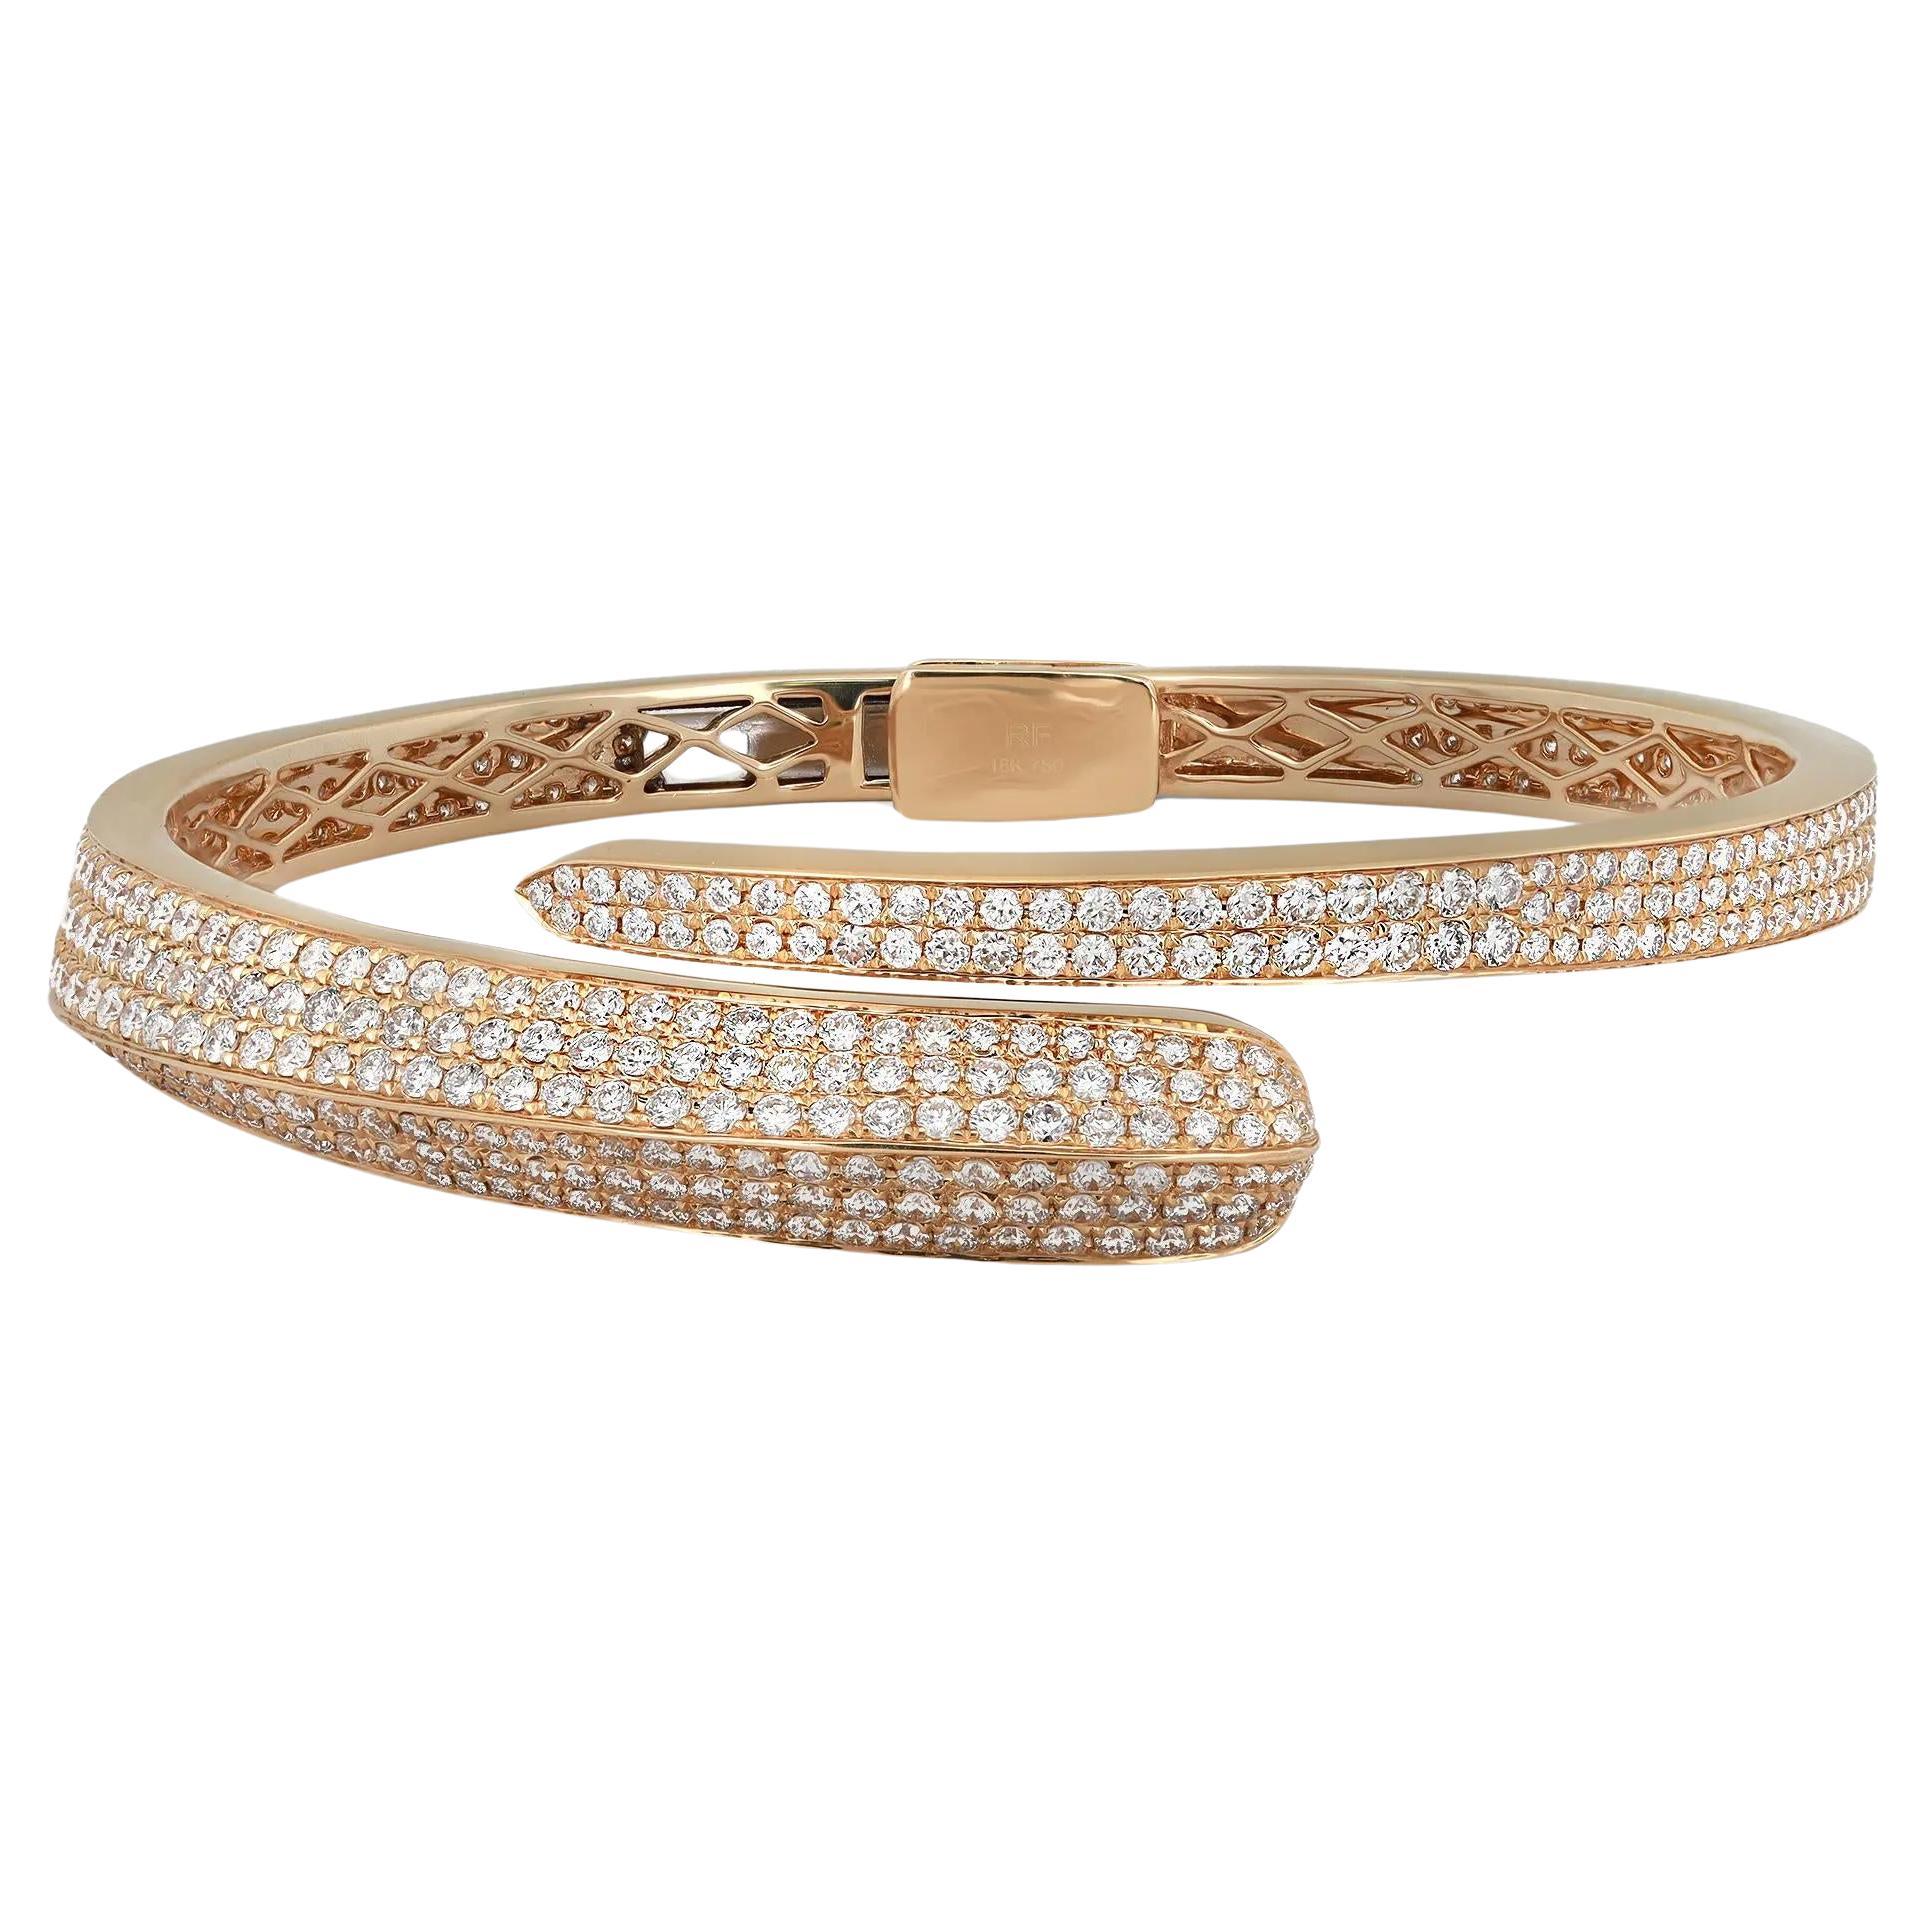 Pave Set Round Cut Diamond Spiral Bangle Bracelet 18K Yellow Gold 4.31Cttw For Sale